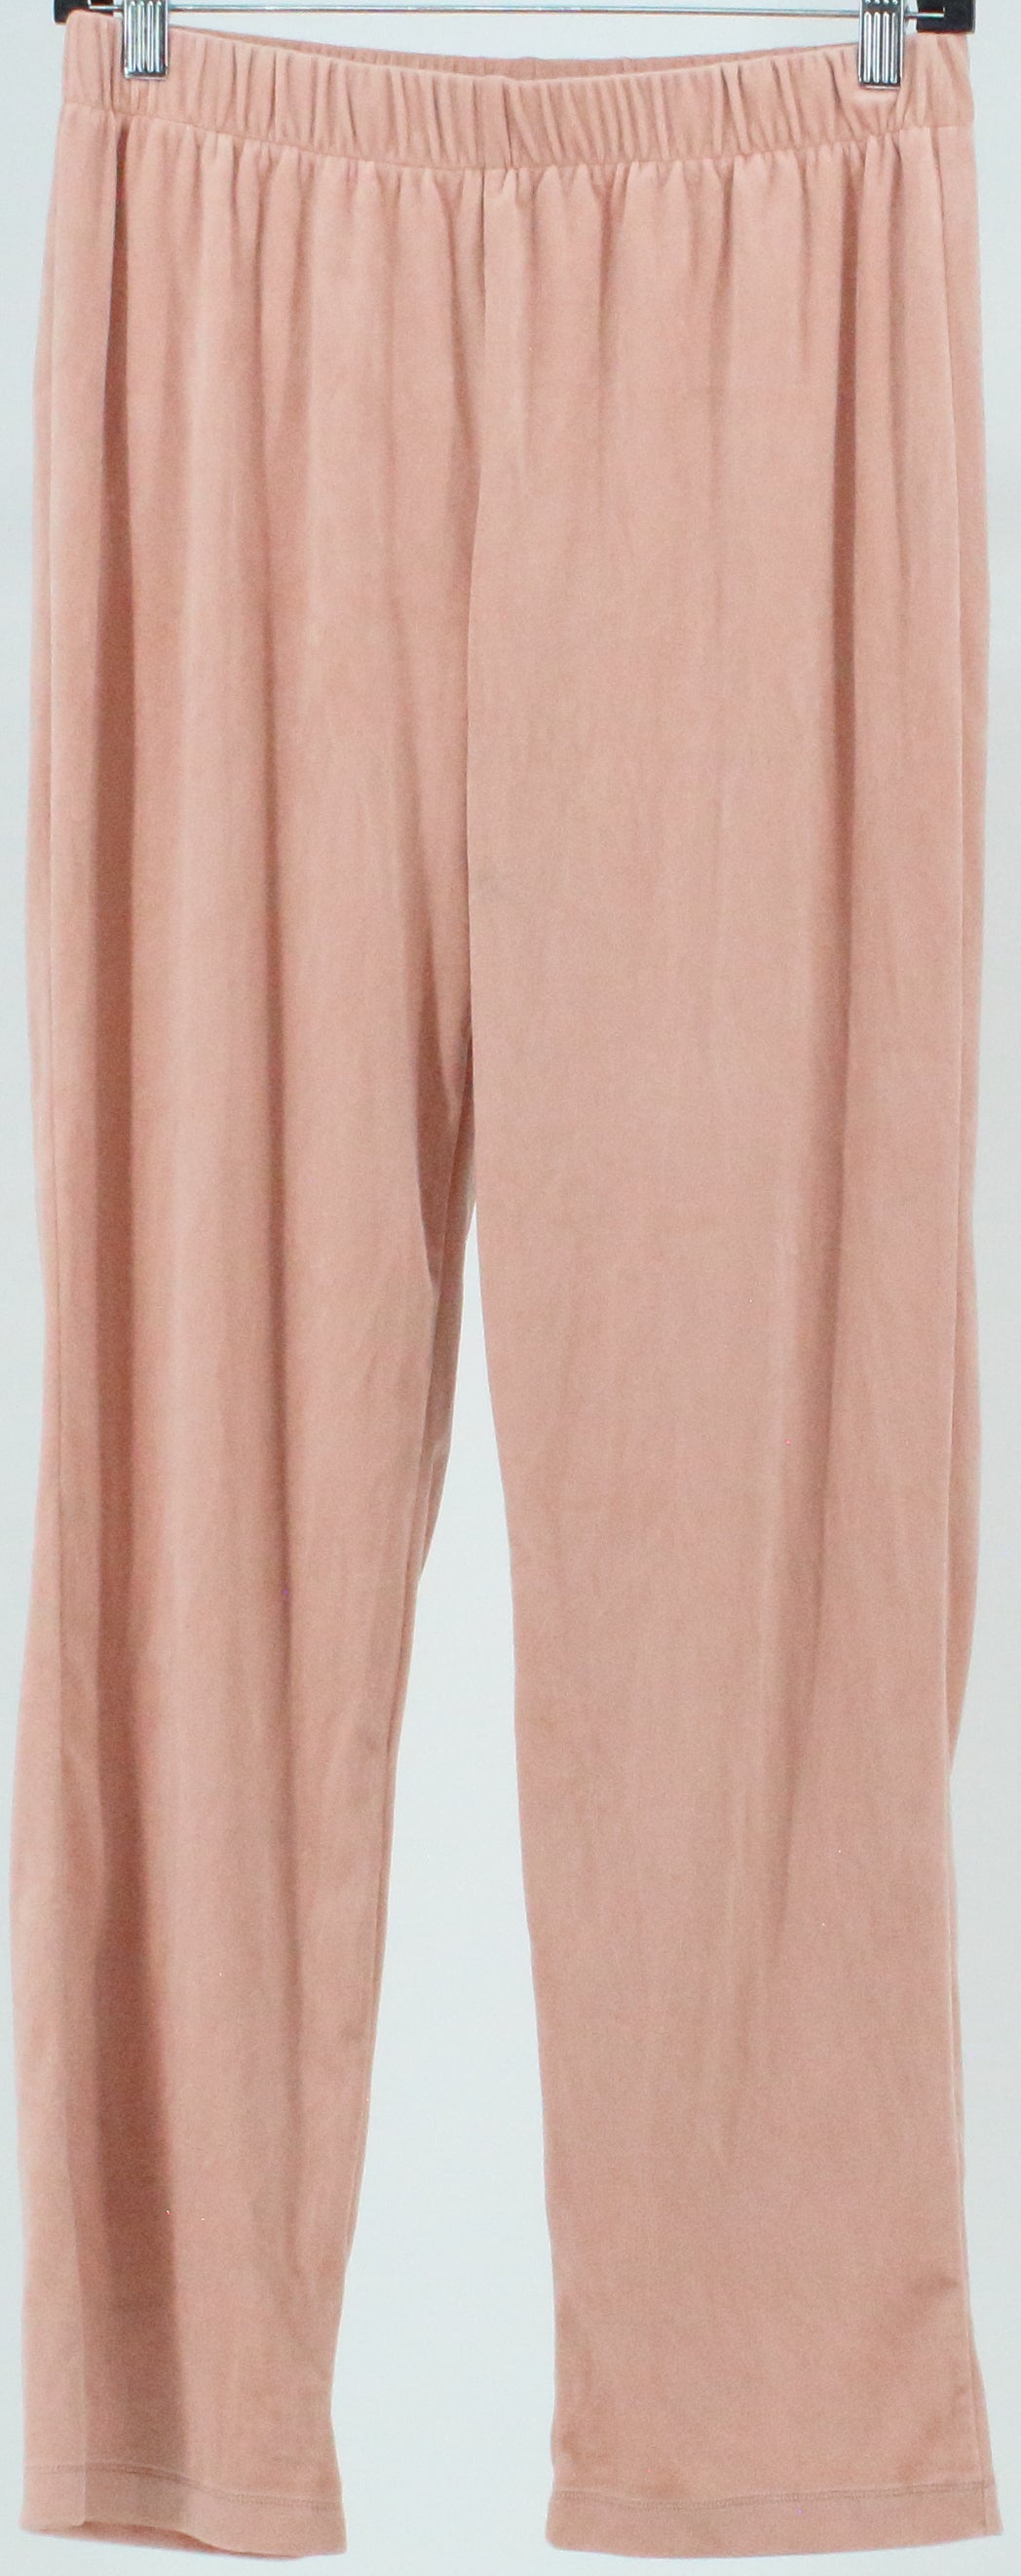 H&M Pink Velour Pants